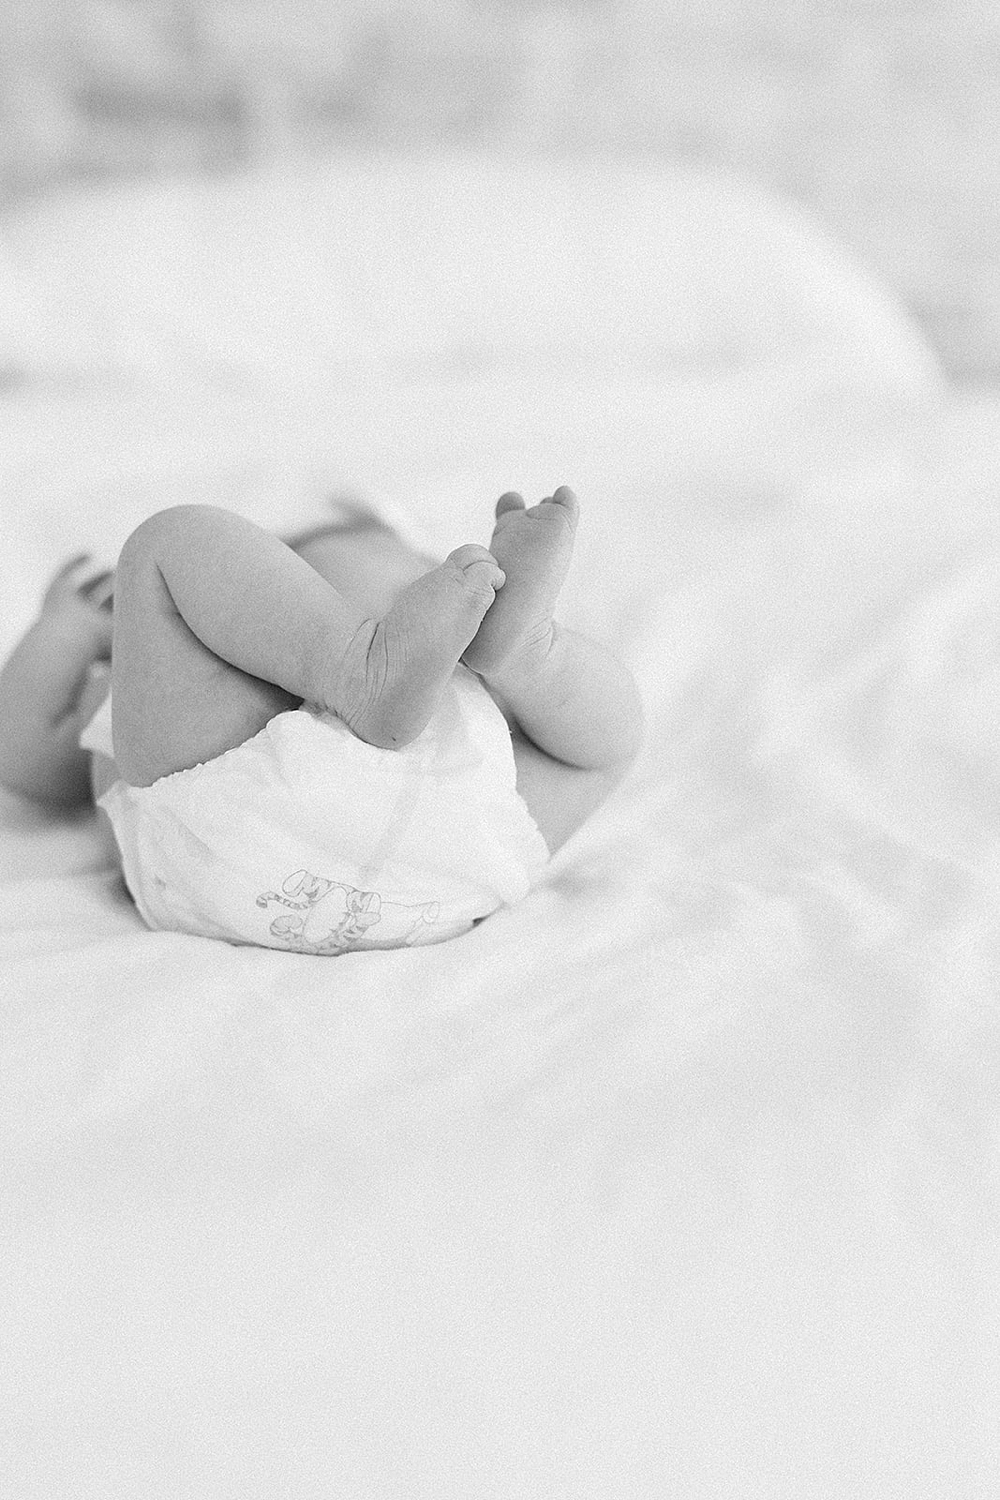 Baby L | Salt Lake Newborn Photographer